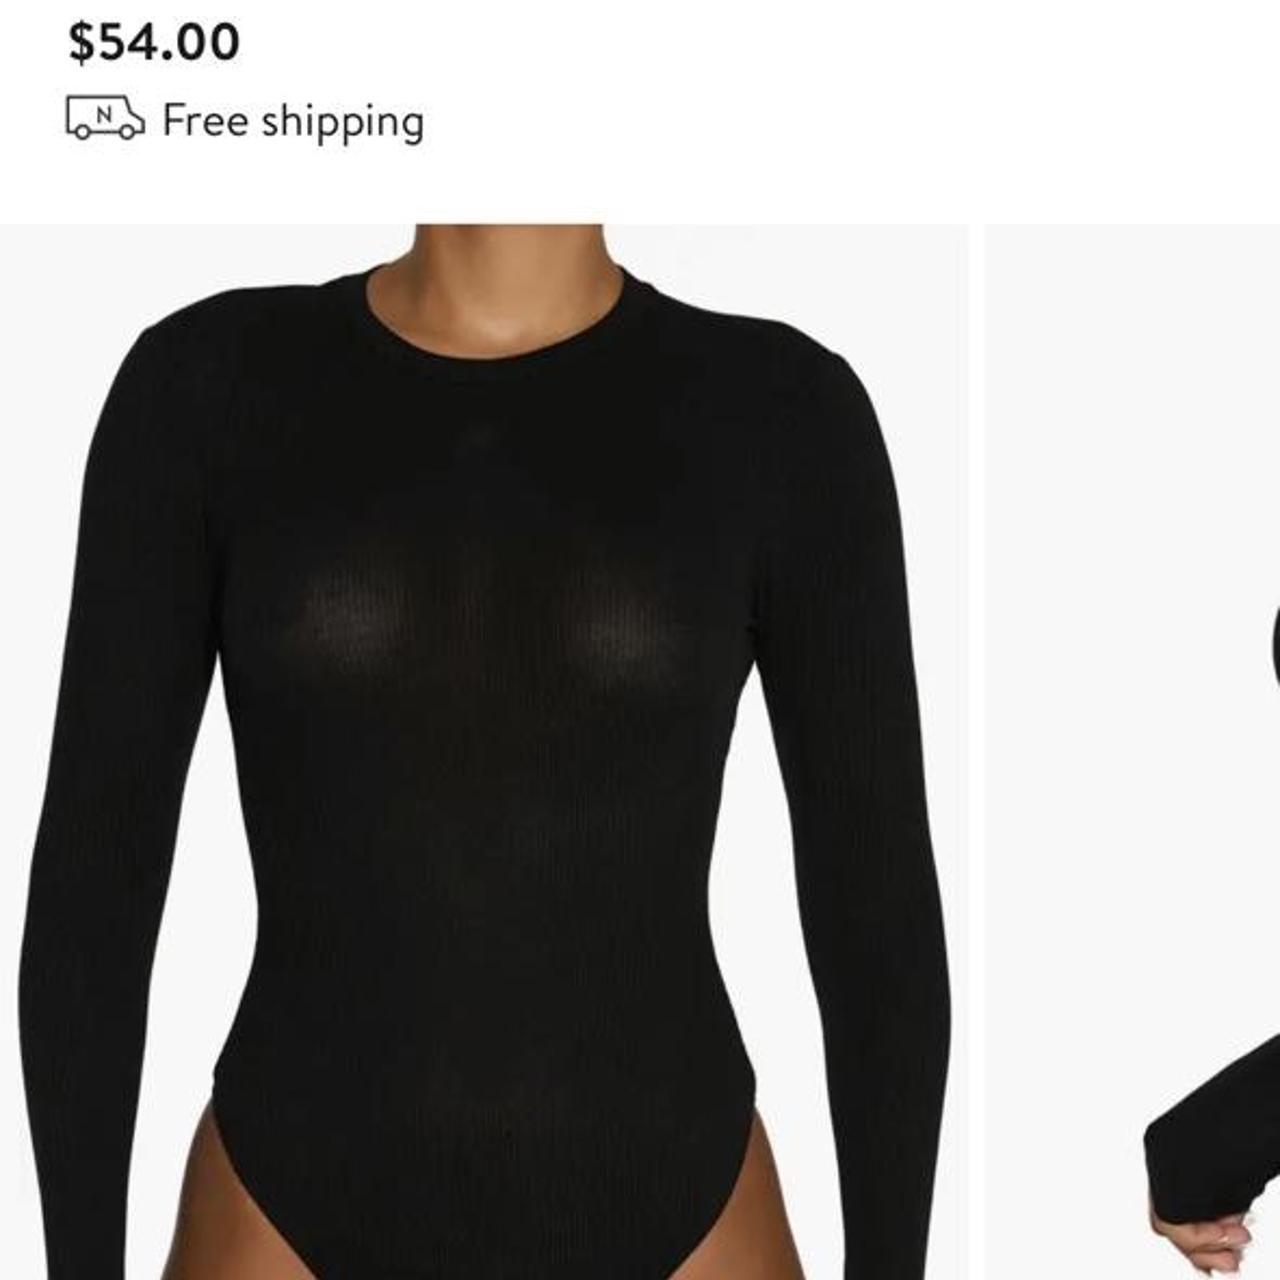 Nordstrom “naked wardrobe” long sleeve bodysuit. A - Depop